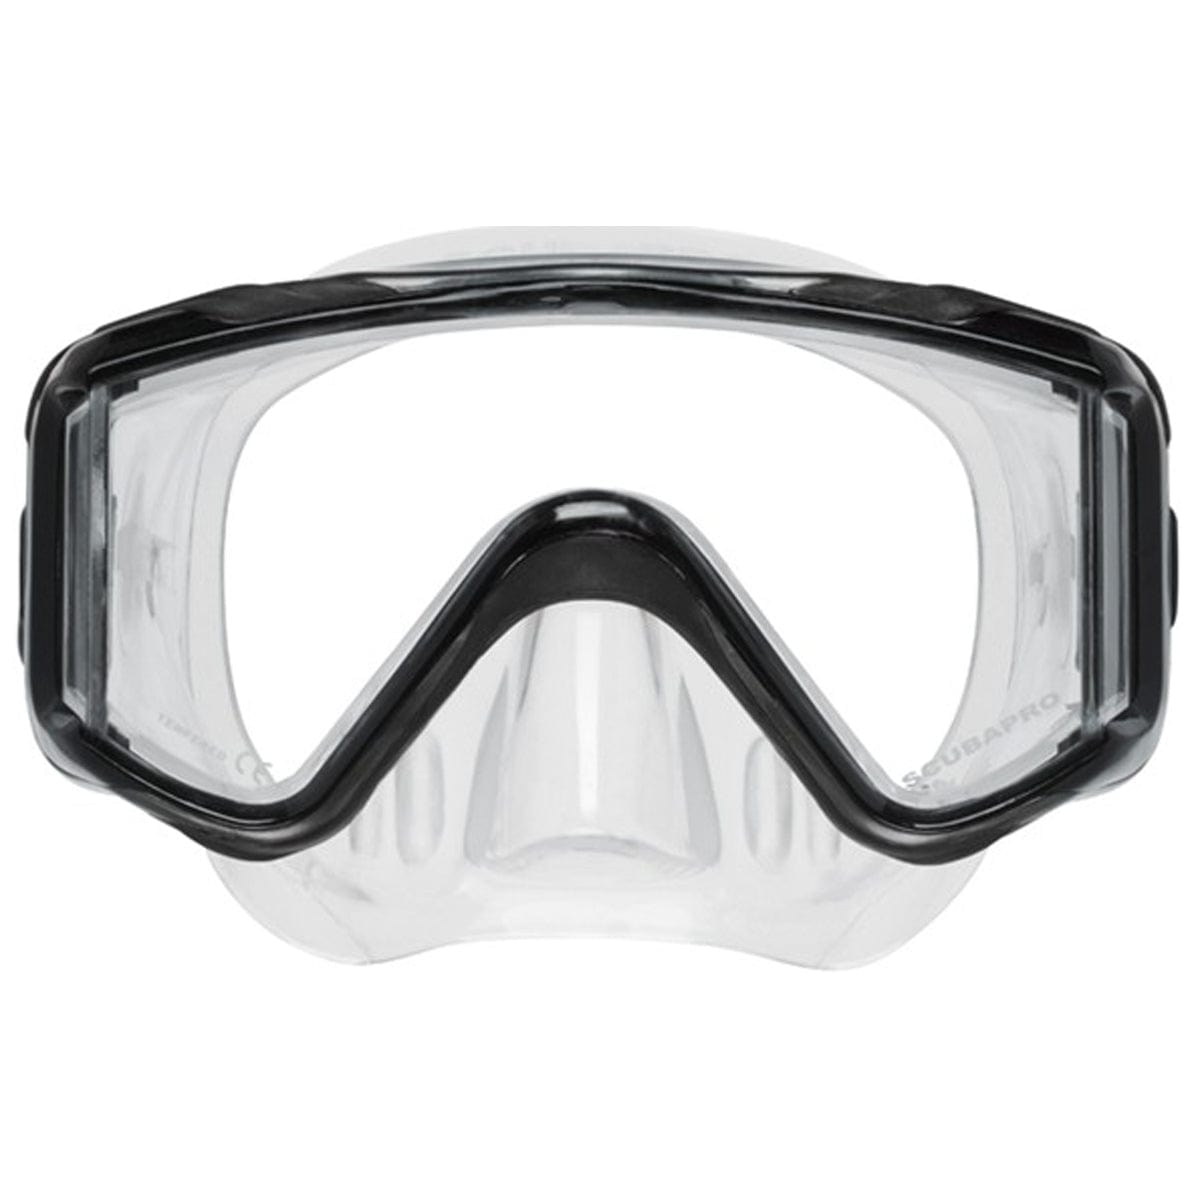 Scubapro Crystal VU Plus w/o Purge Mask - Black/Gray-Clear Skirt - 6